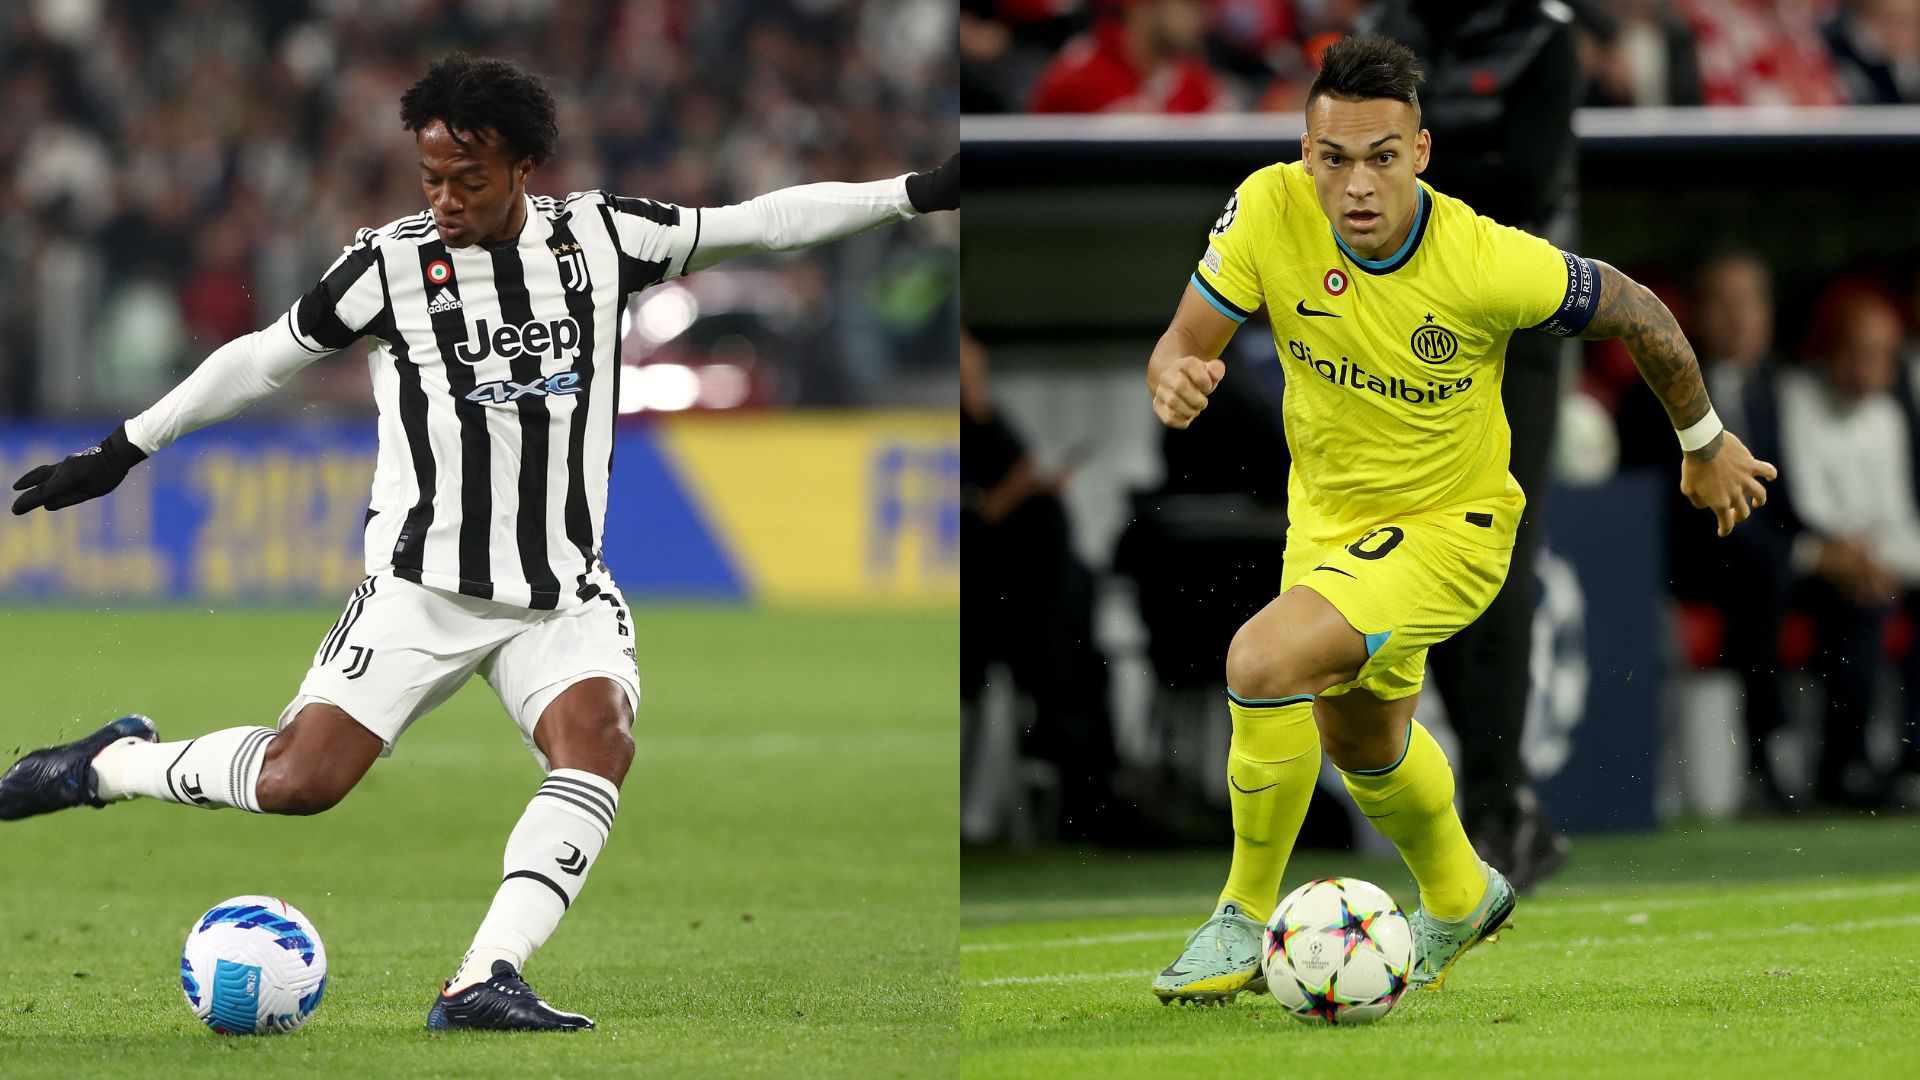 Juventus vs Lazio: A Rivalry Renewed